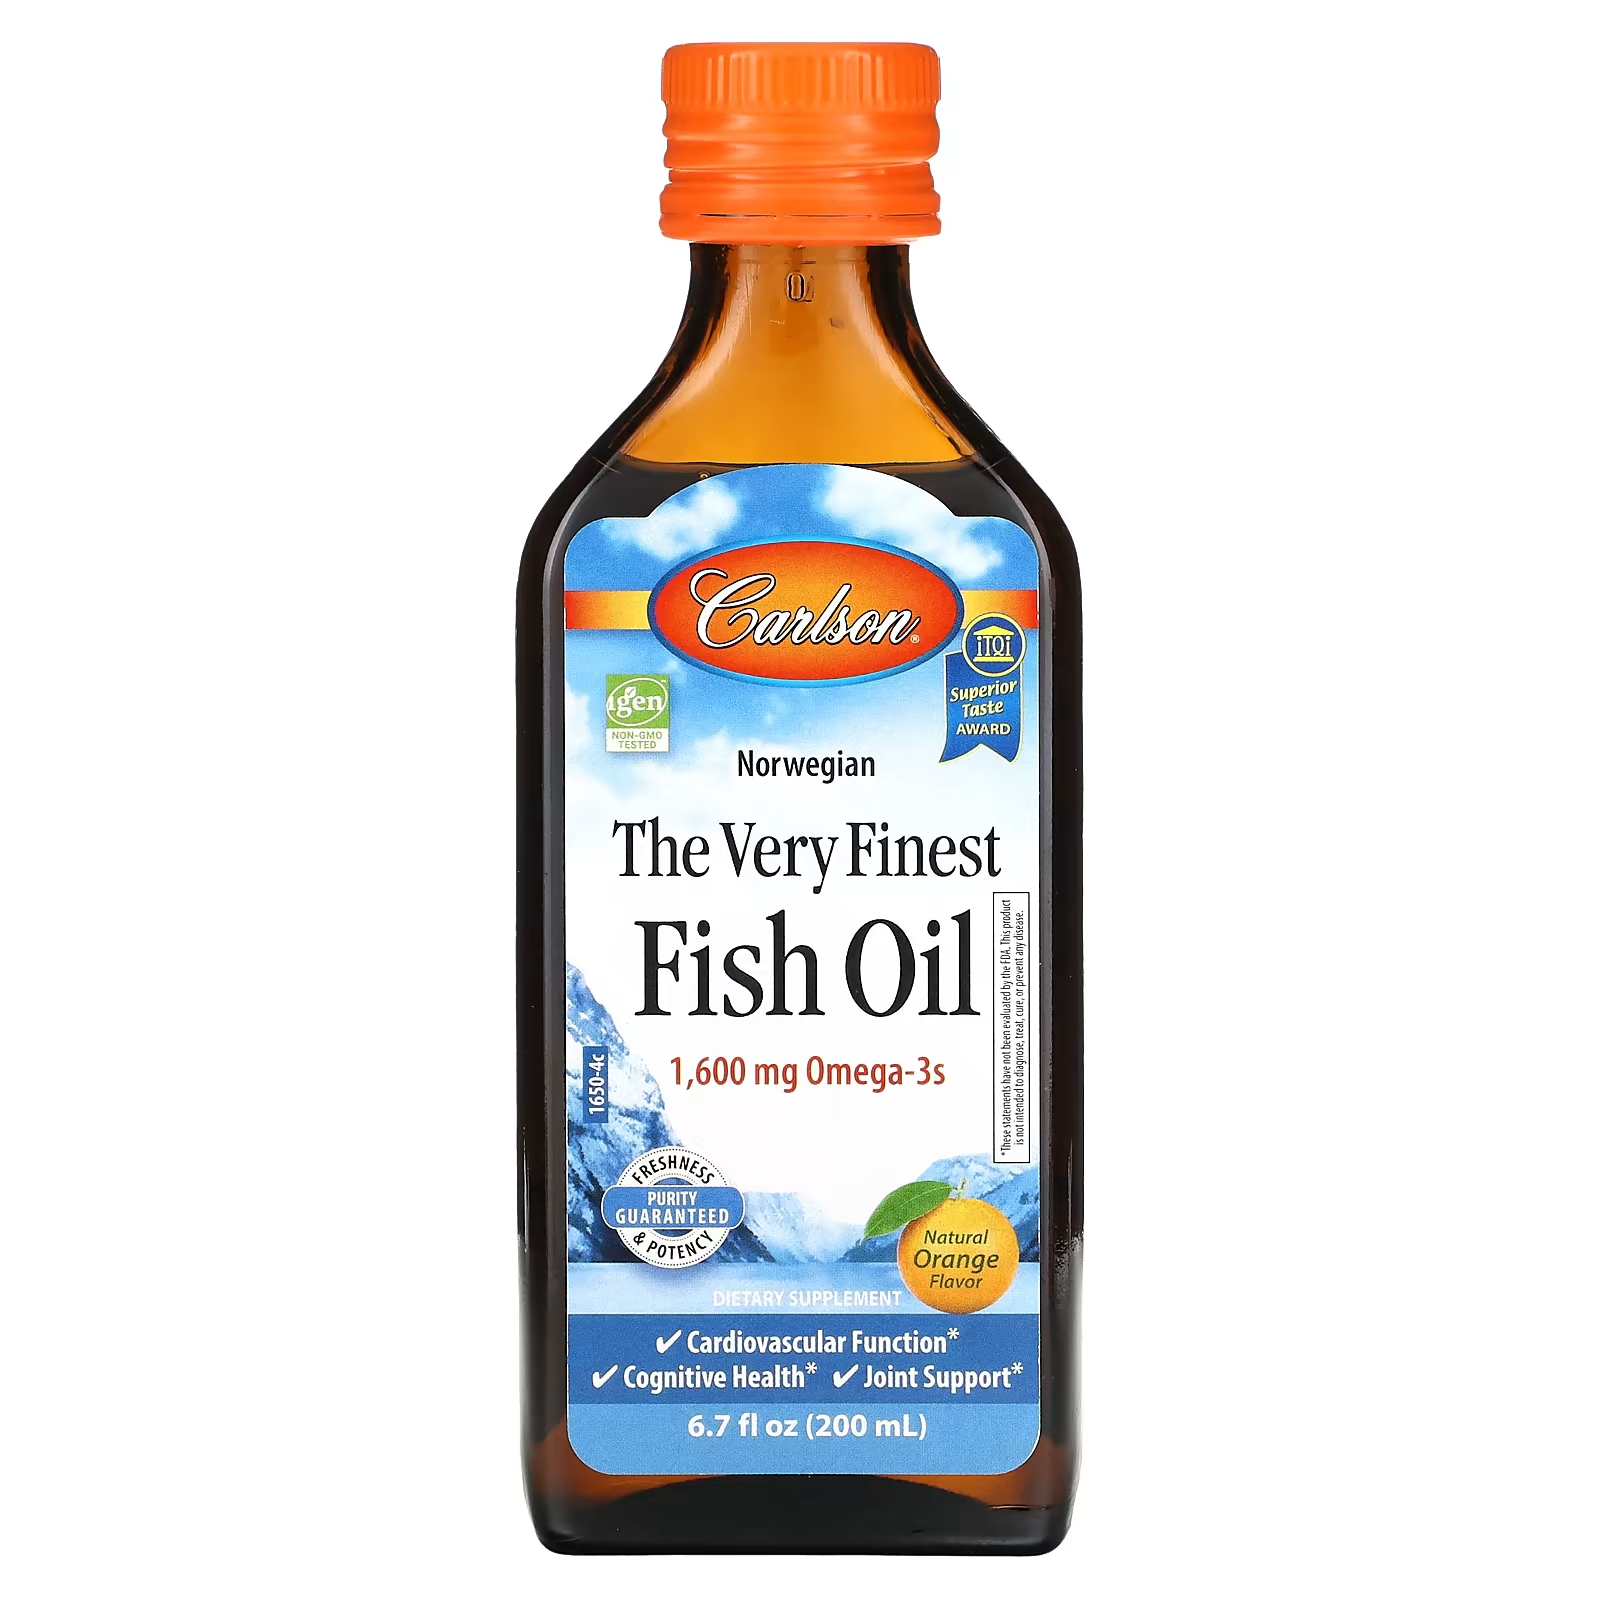 Пищевая добавка Carlson The Very Finest Fish Oil Natural Orange, 200 мл carlson norwegian the very finest fish oil natural mixed berry 1 600 mg 6 7 fl oz 200 ml